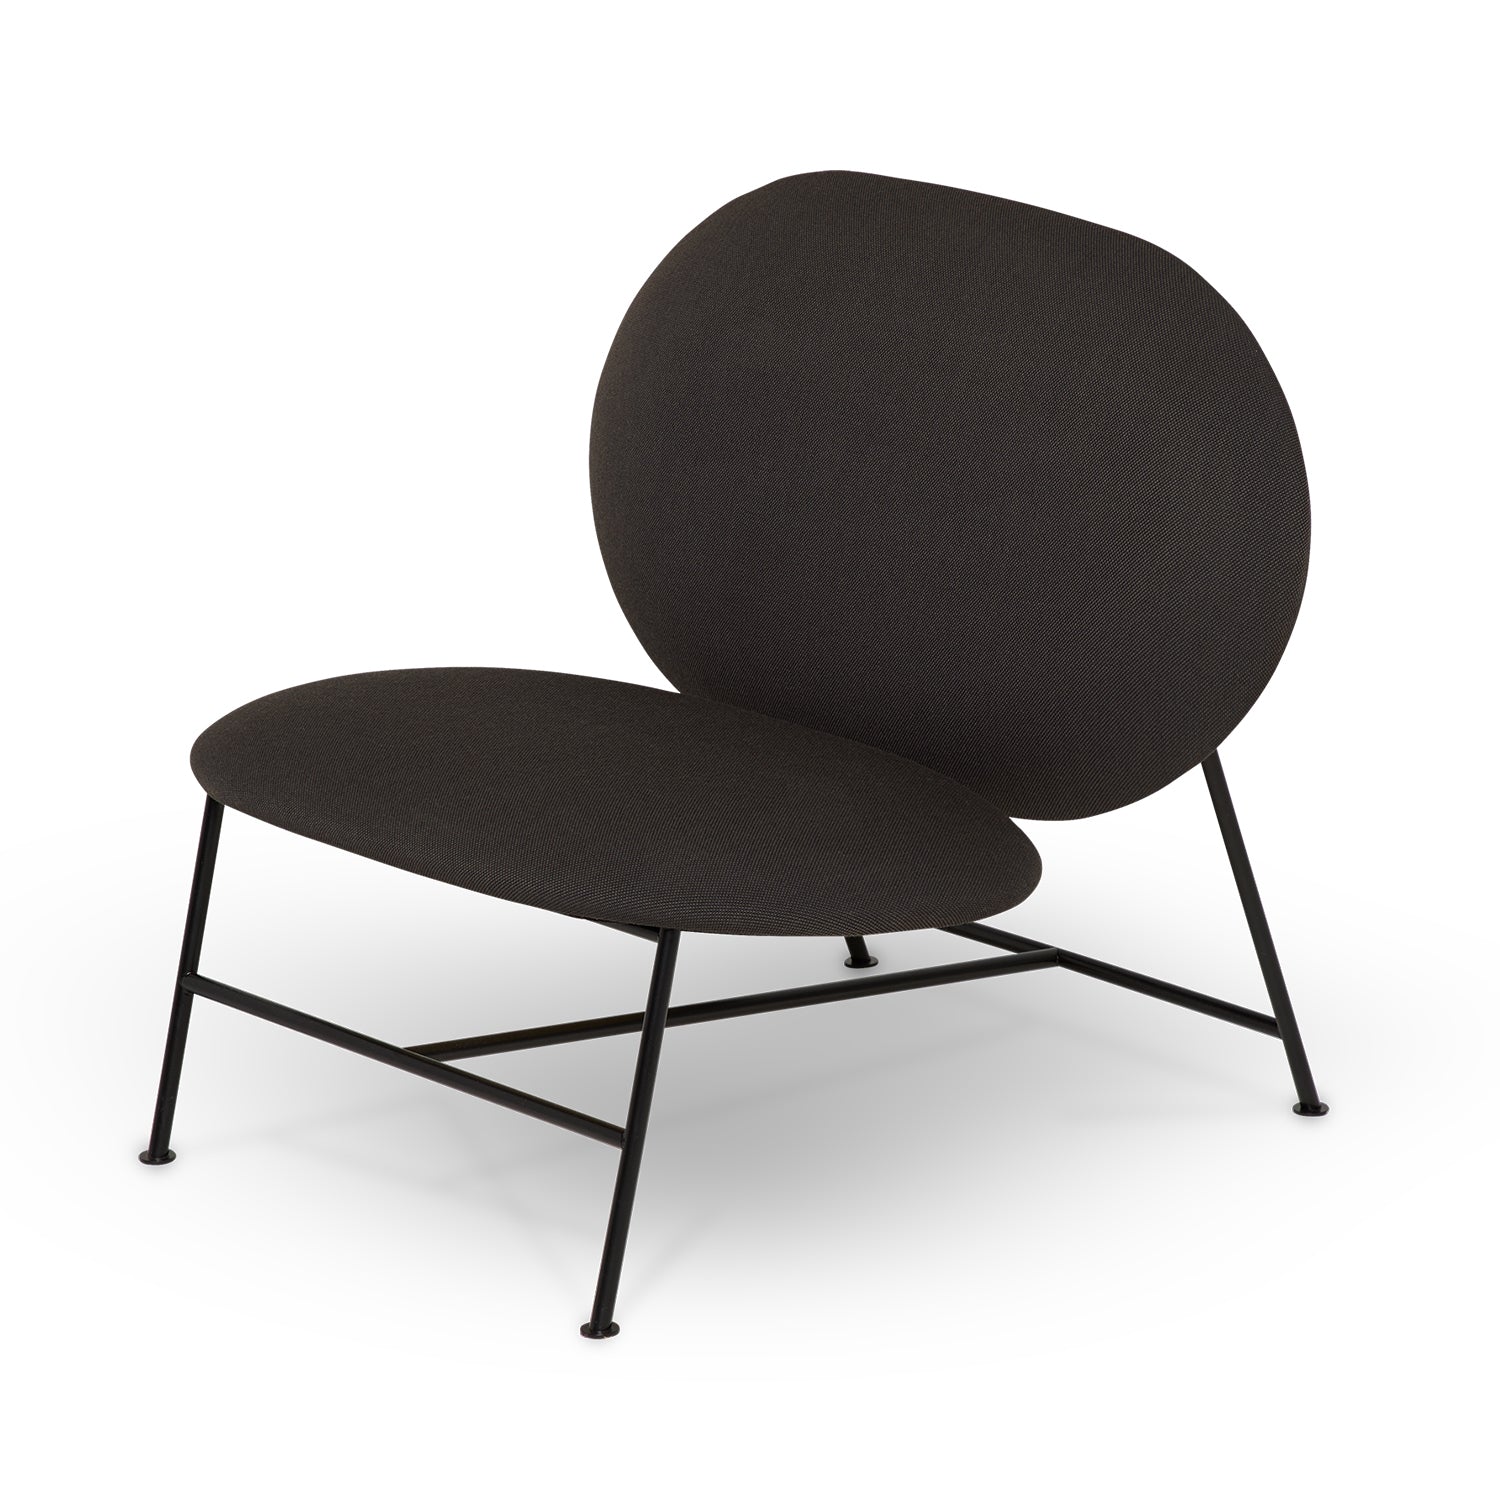 Northern Oblong Lounge Chair in Dark Grey